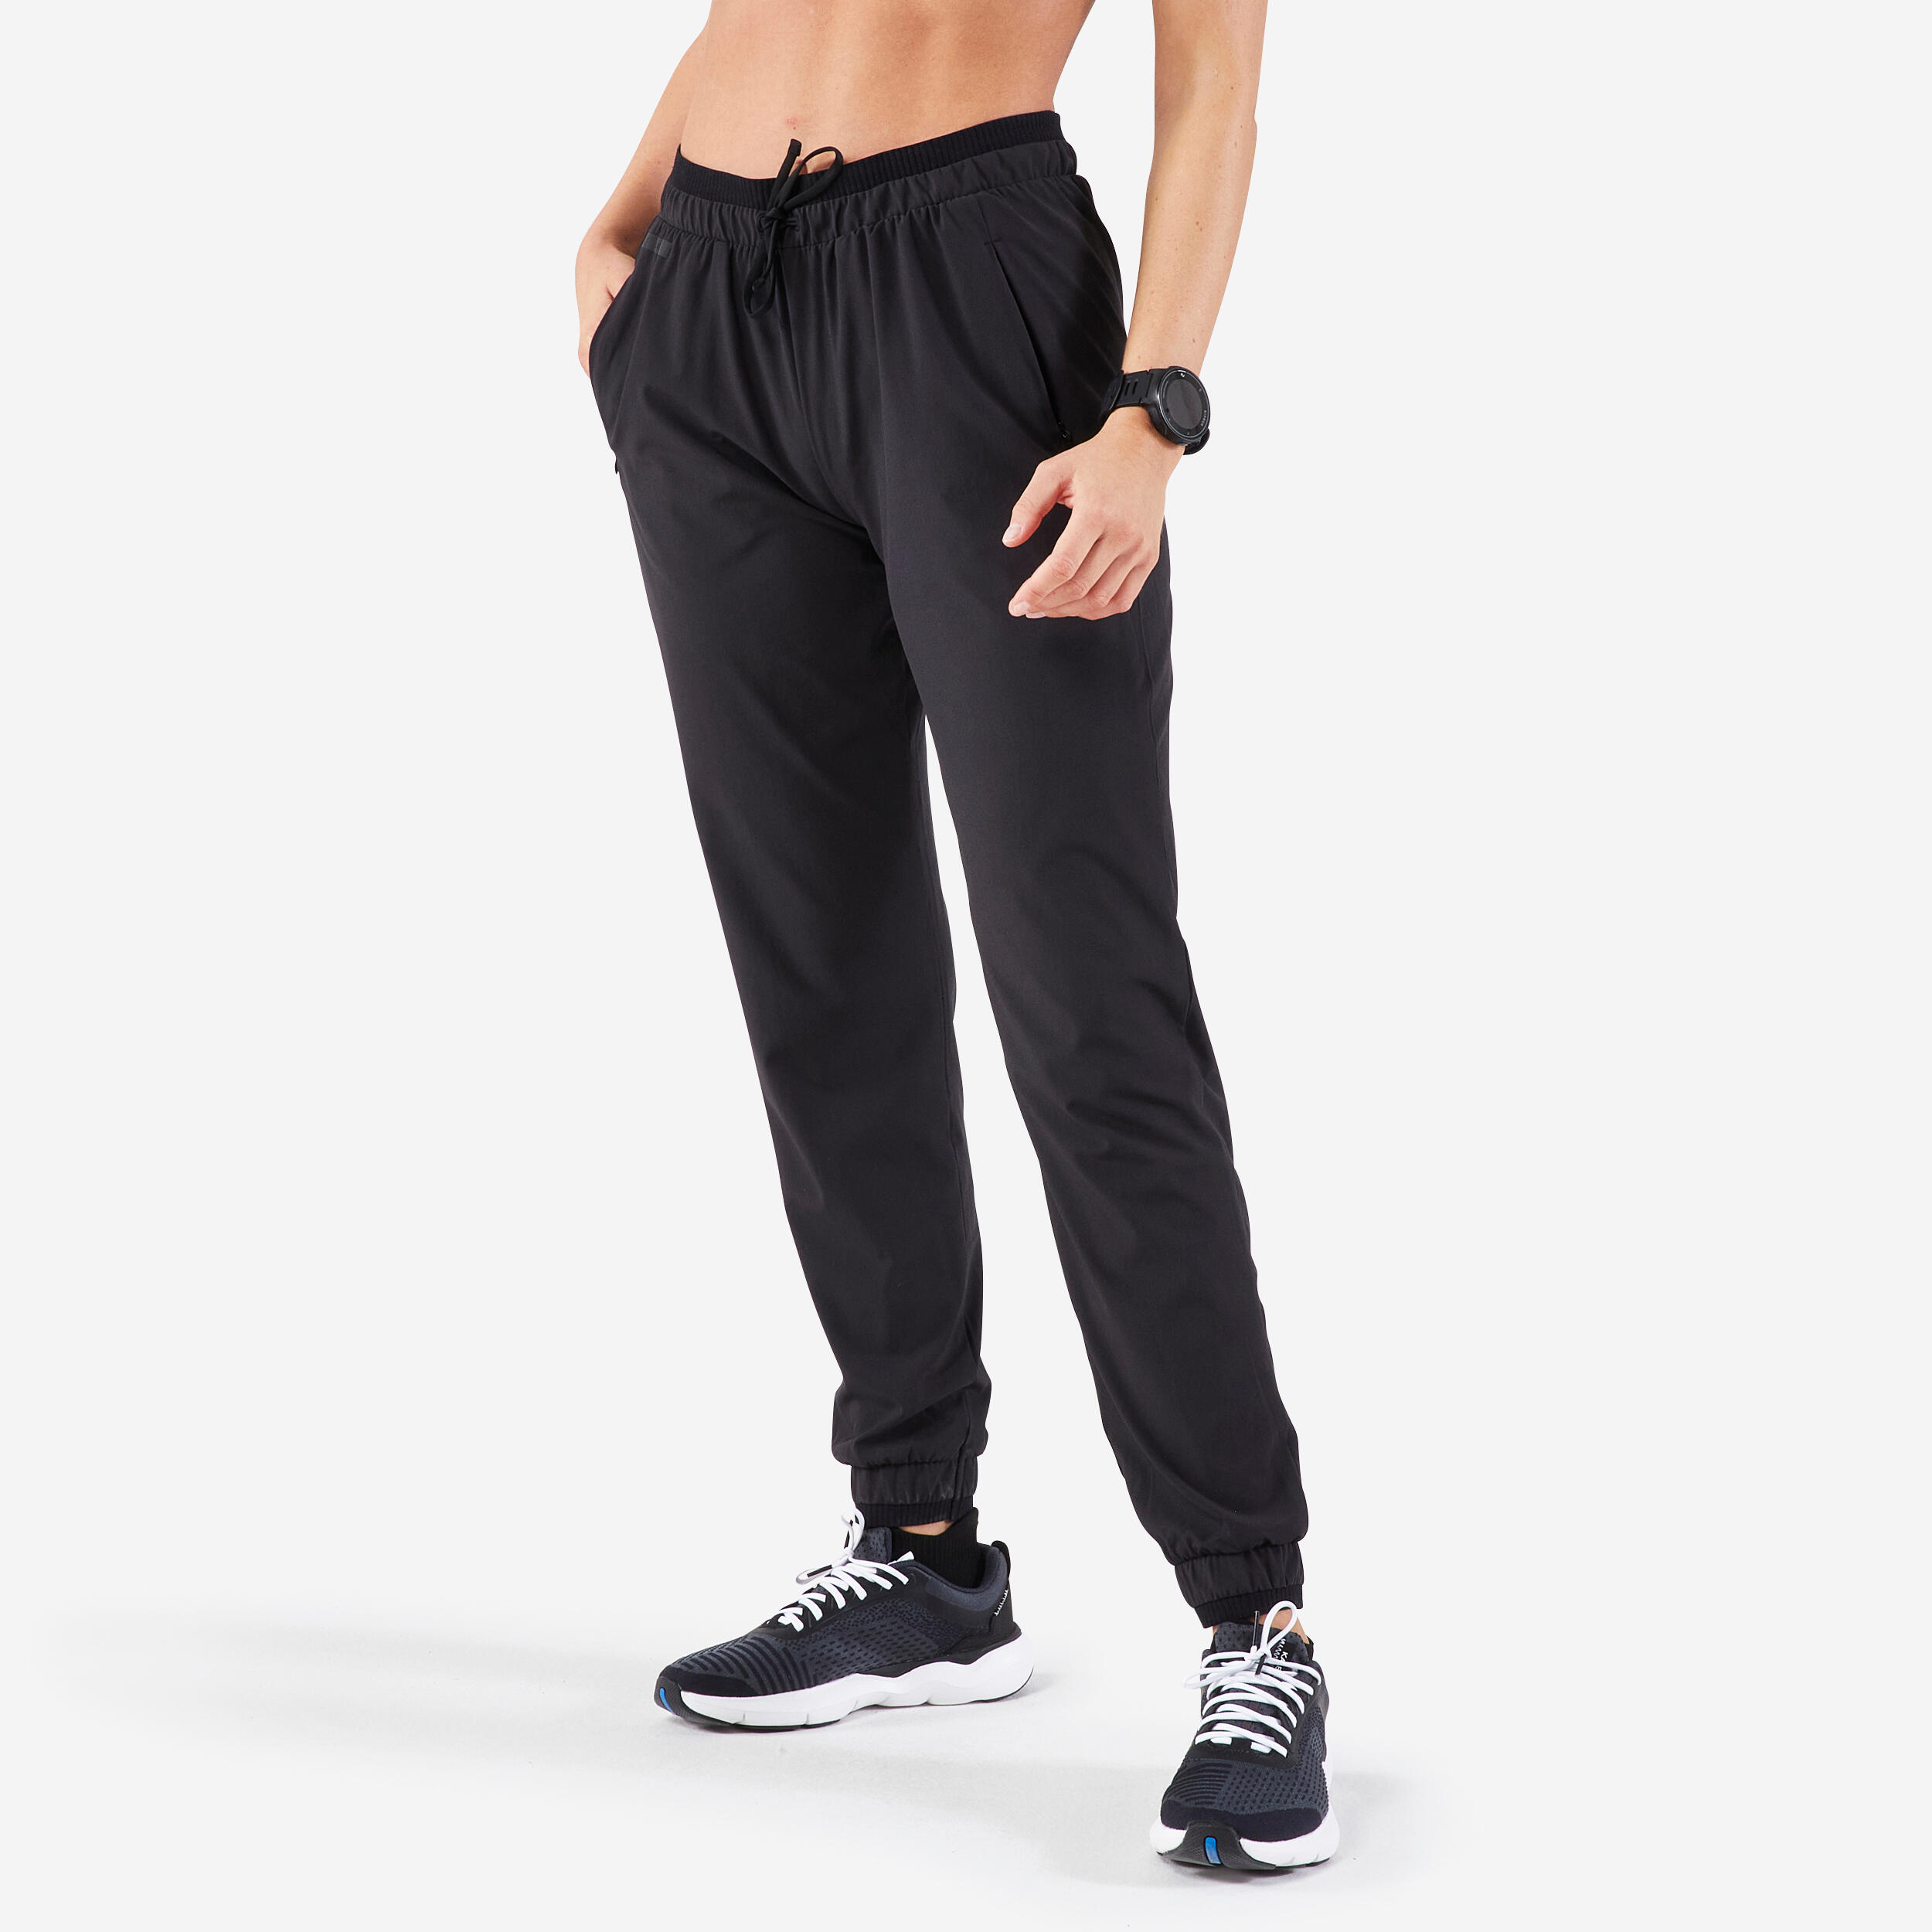 KALENJI Women's Jogging Running Breathable Trousers Dry - black